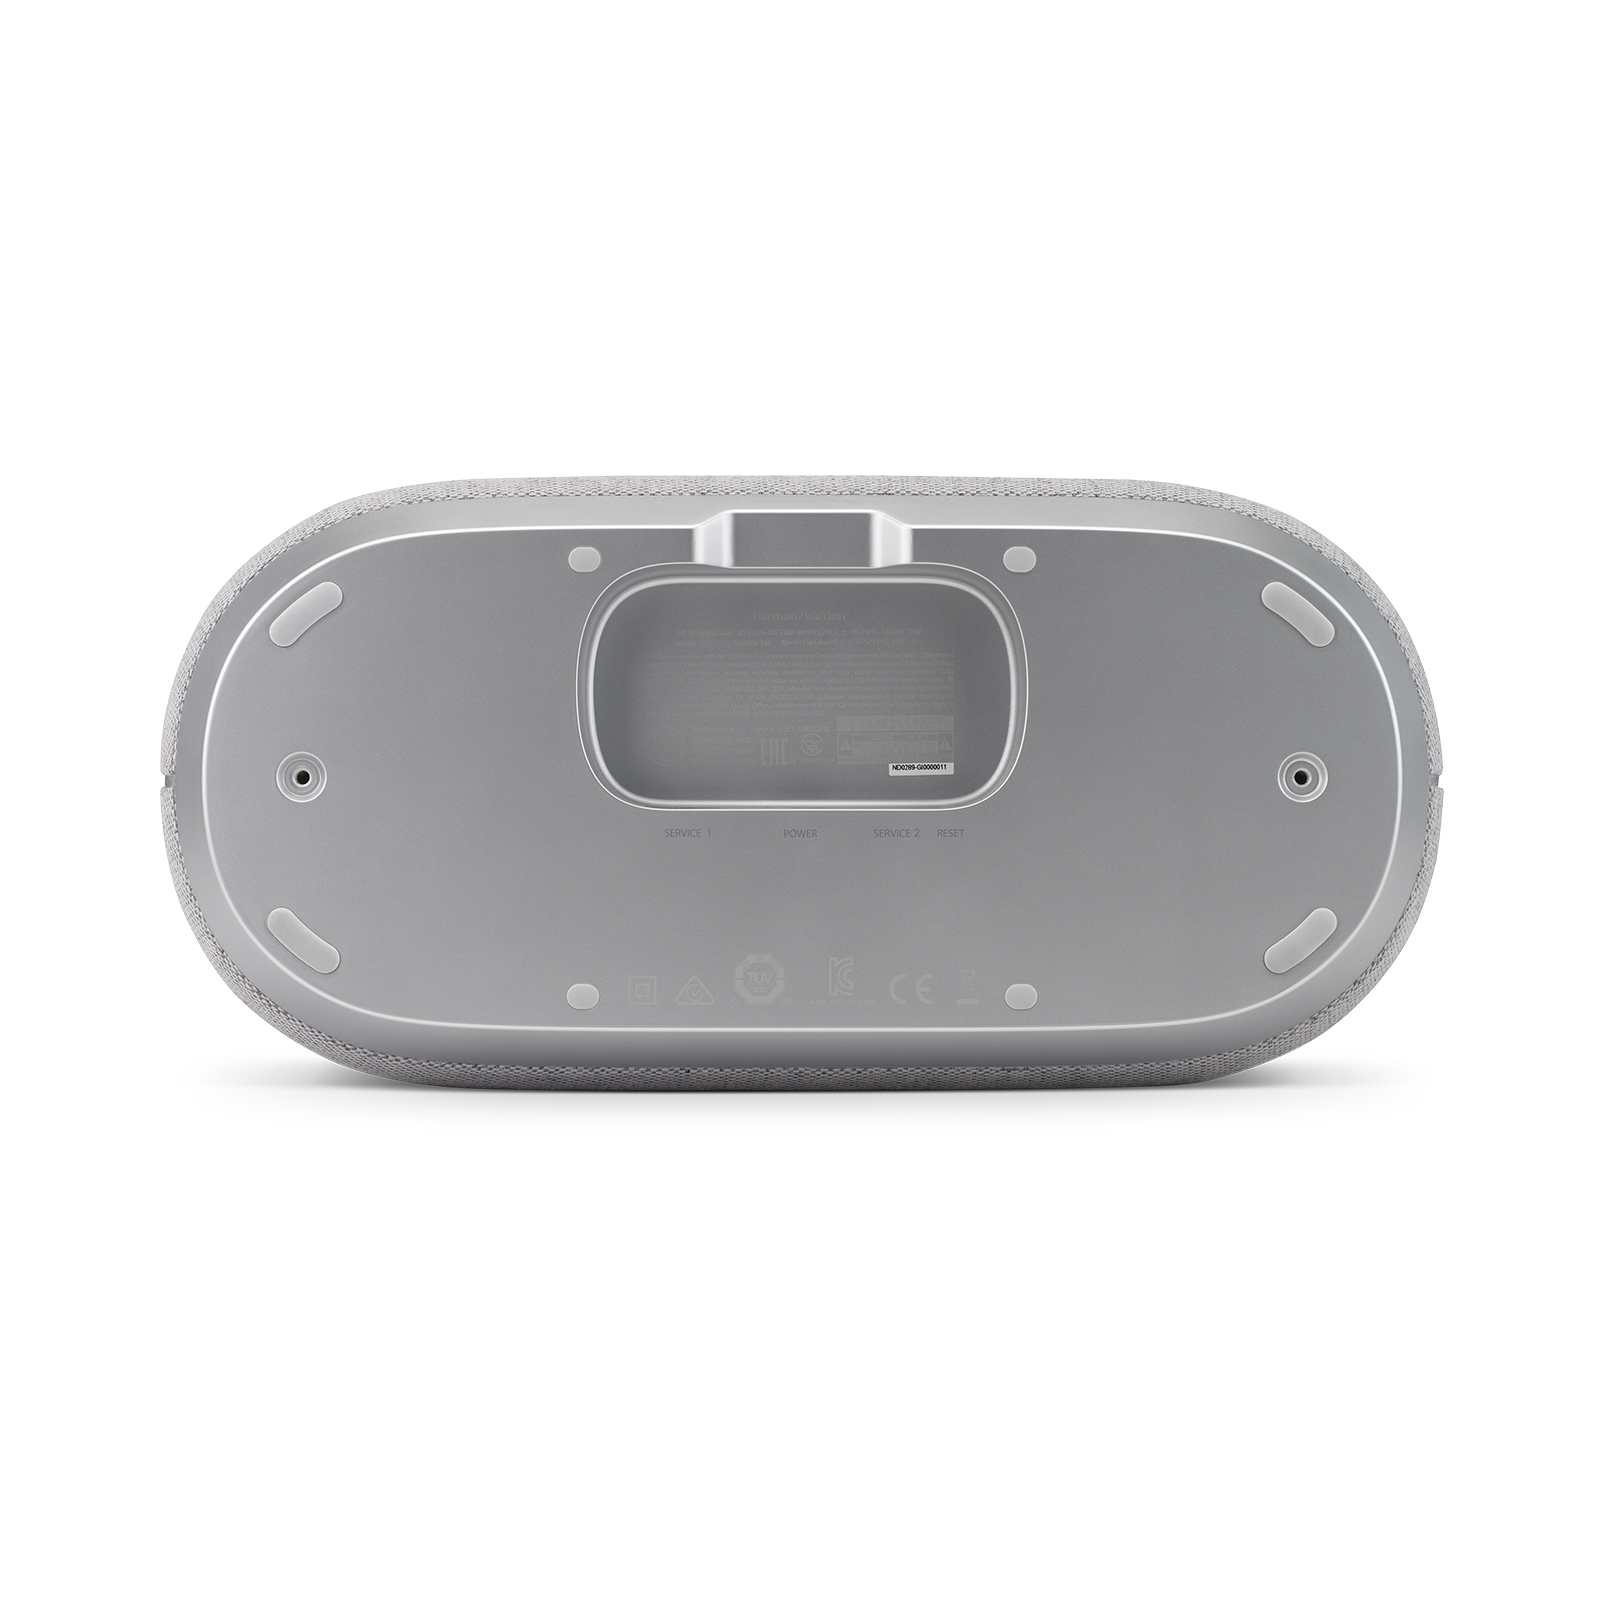 Harman Kardon Citation 300 - Grey - The medium-size smart home speaker with award winning design - Detailshot 2